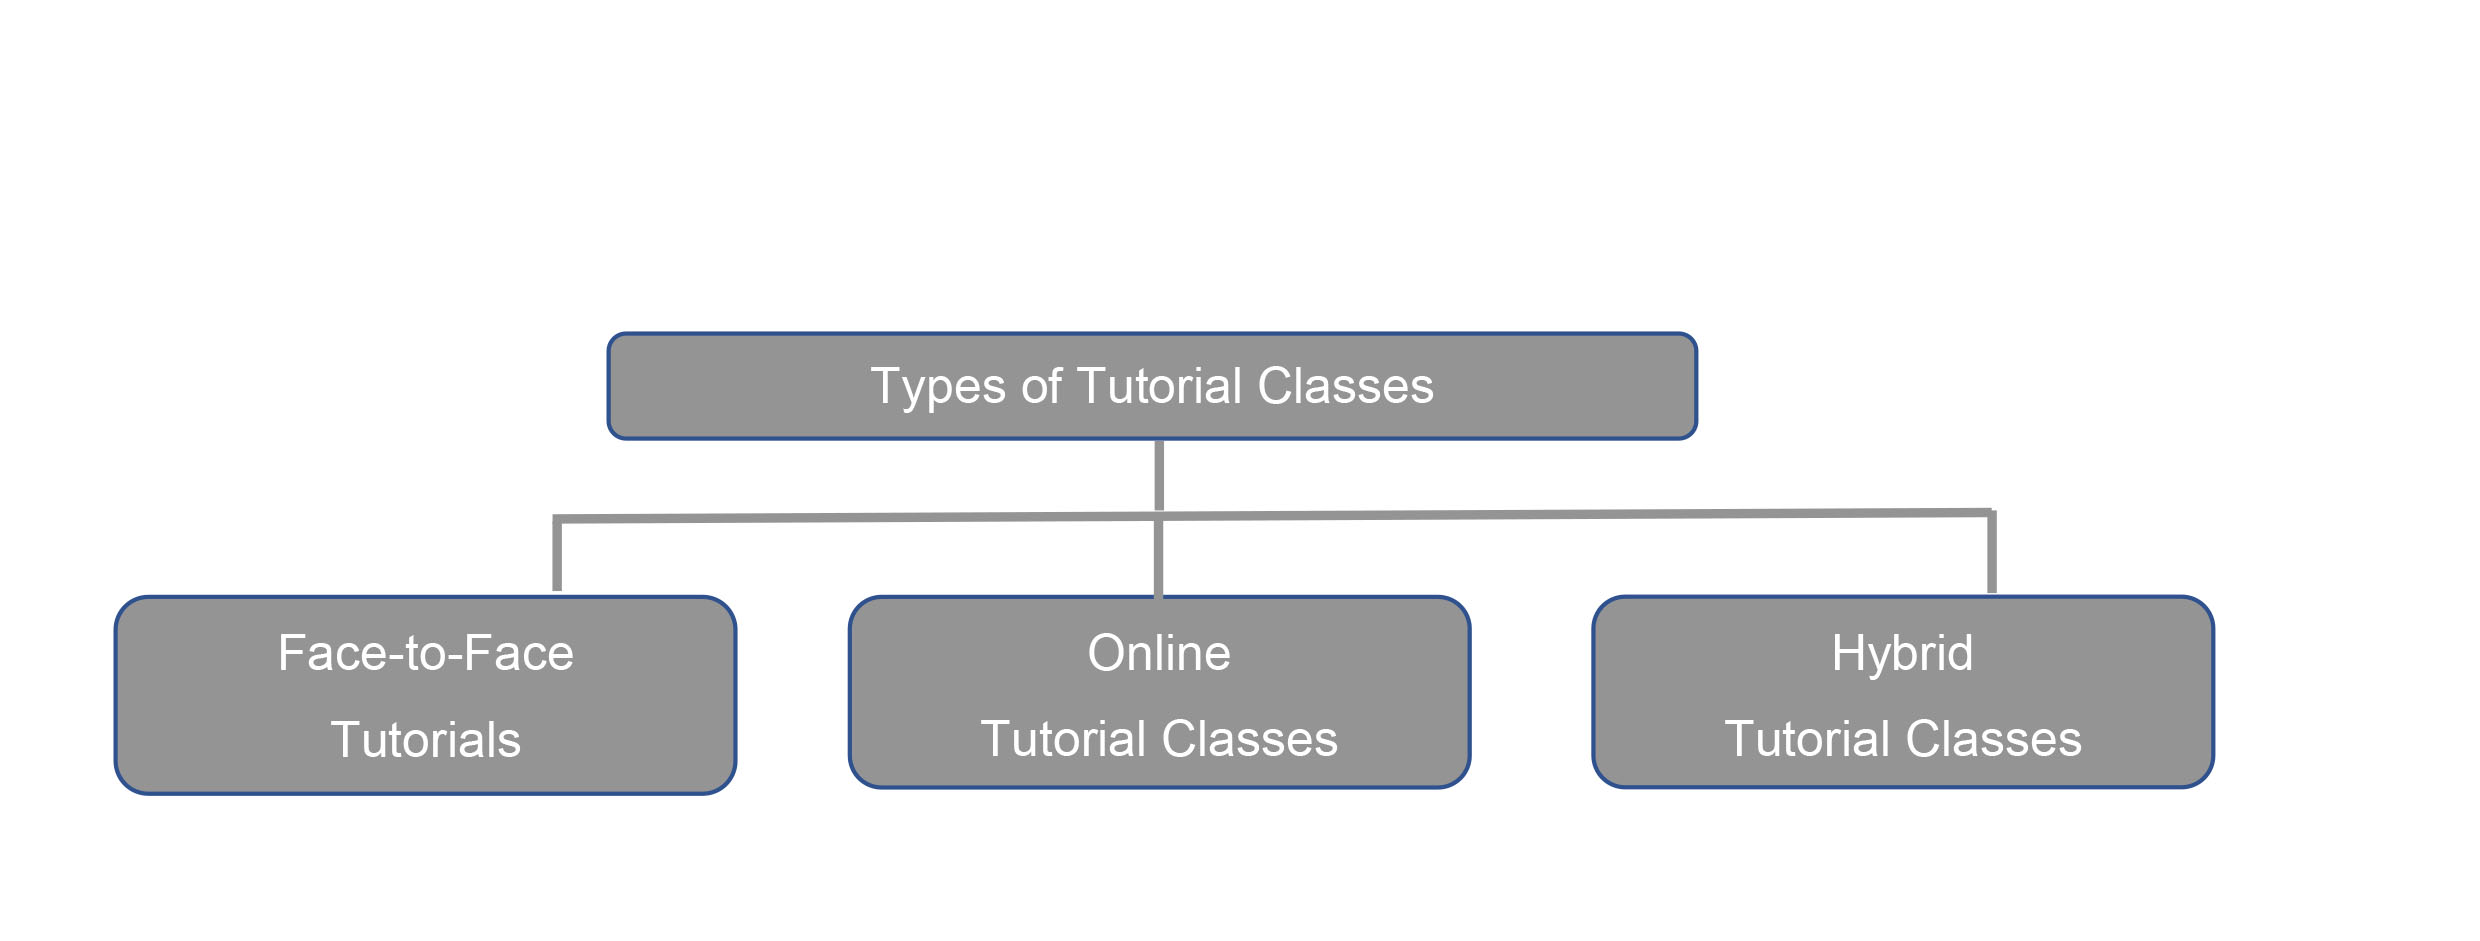 Types of Tutorial Classes